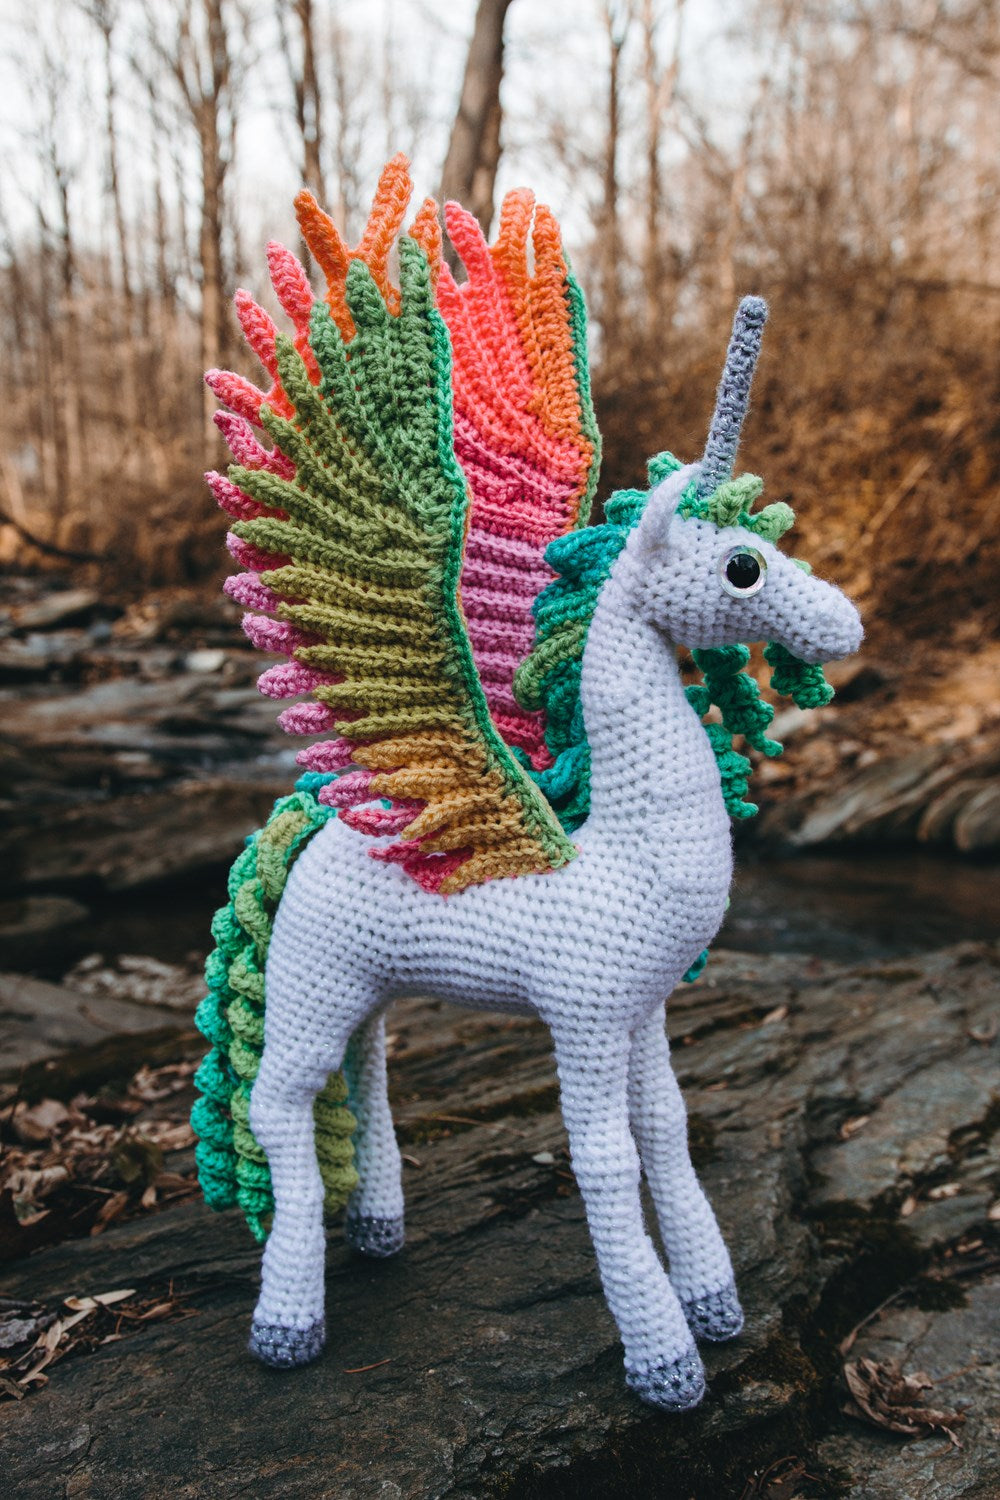 Crochet Creatures by Megan Lapp